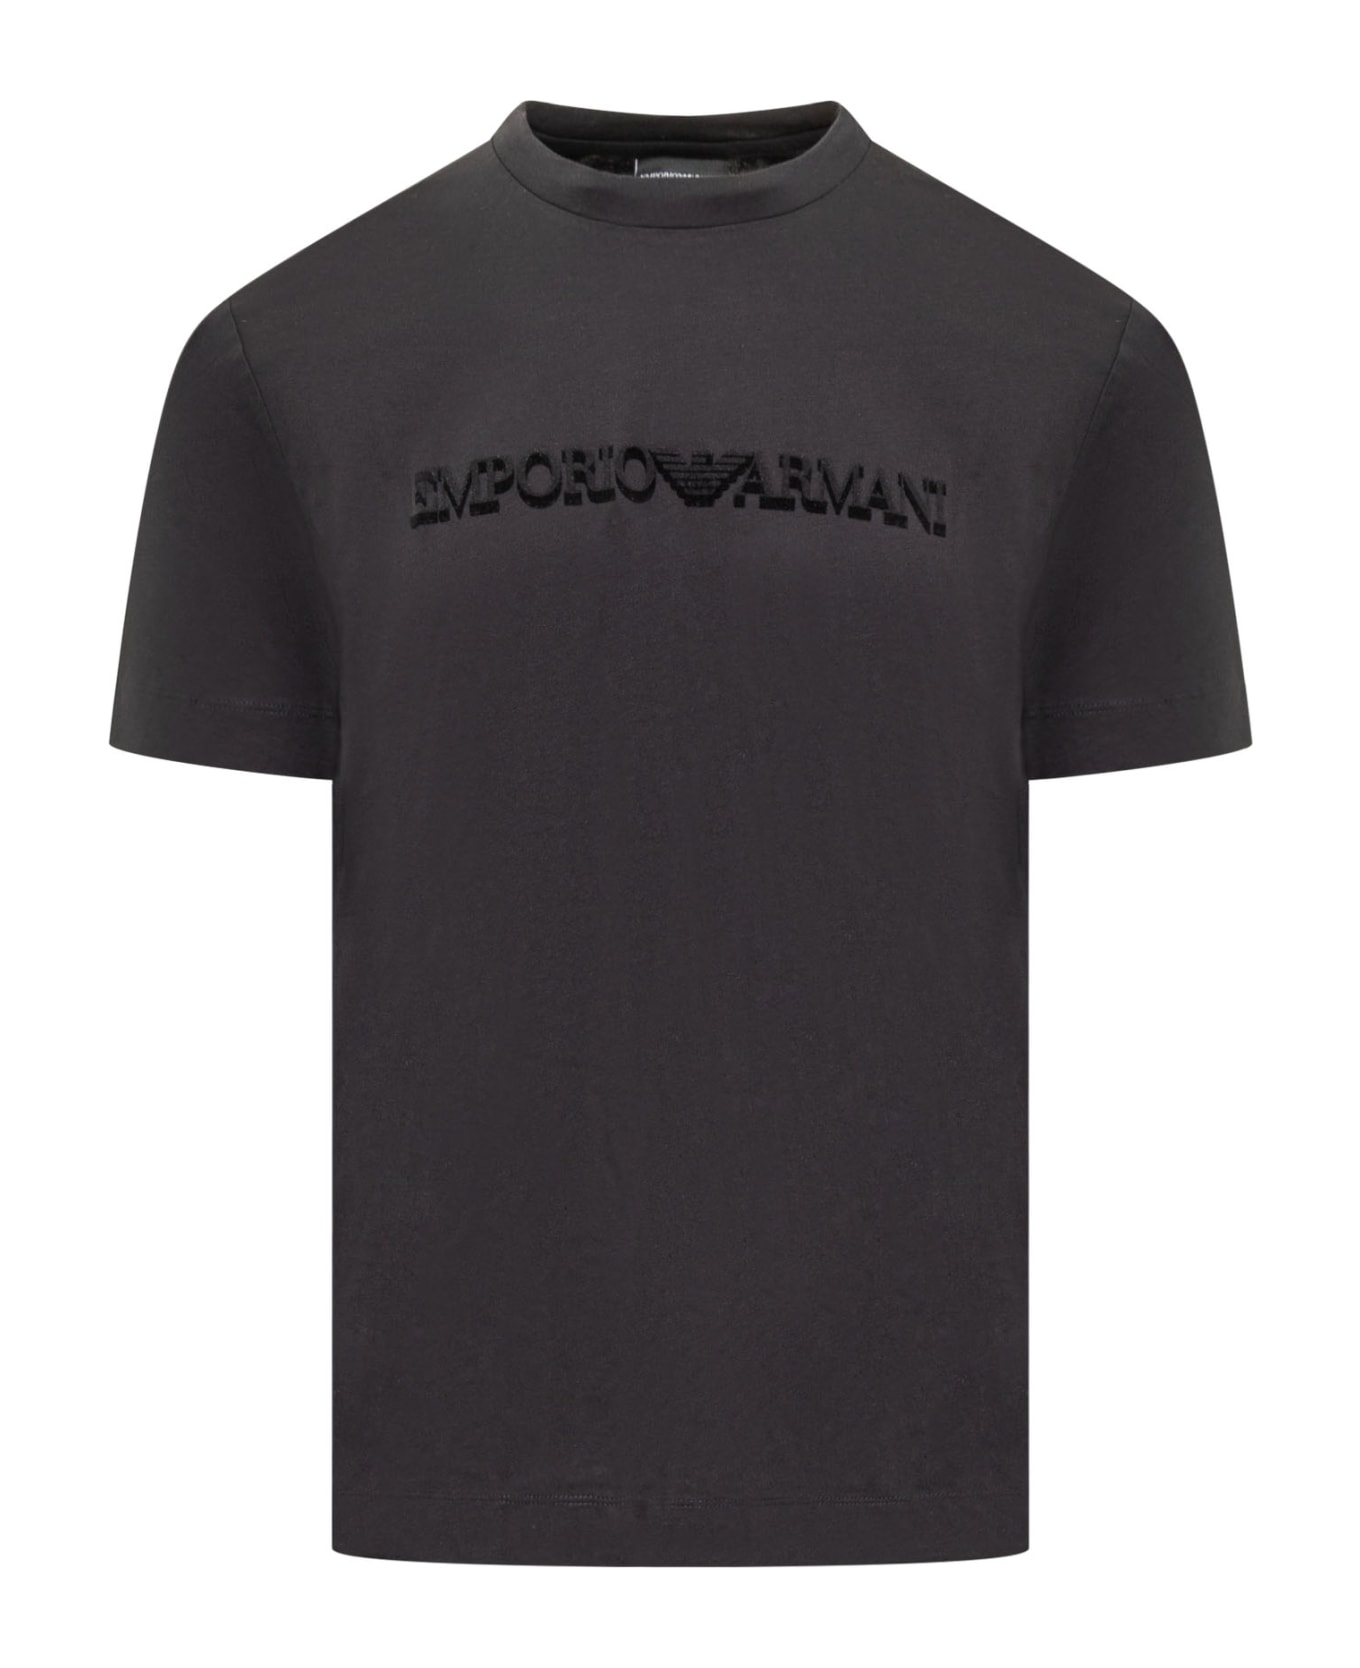 Emporio Armani T-shirt - NAVY LOGO シャツ